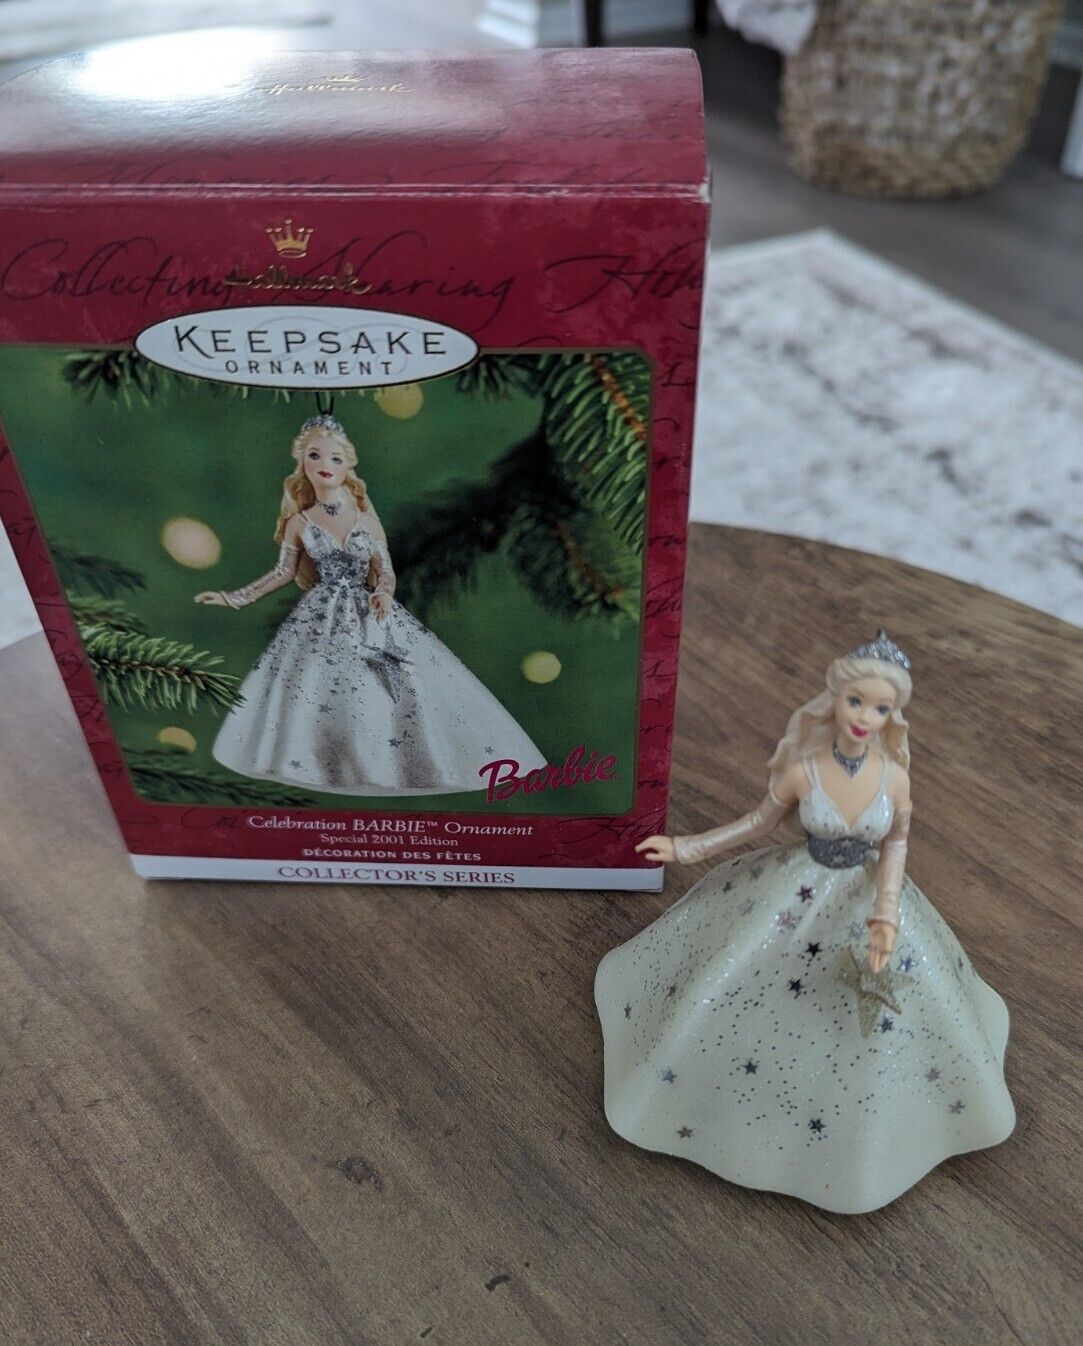 Hallmark Keepsake Ornament Celebration Barbie Special 2001 Edition Christmas